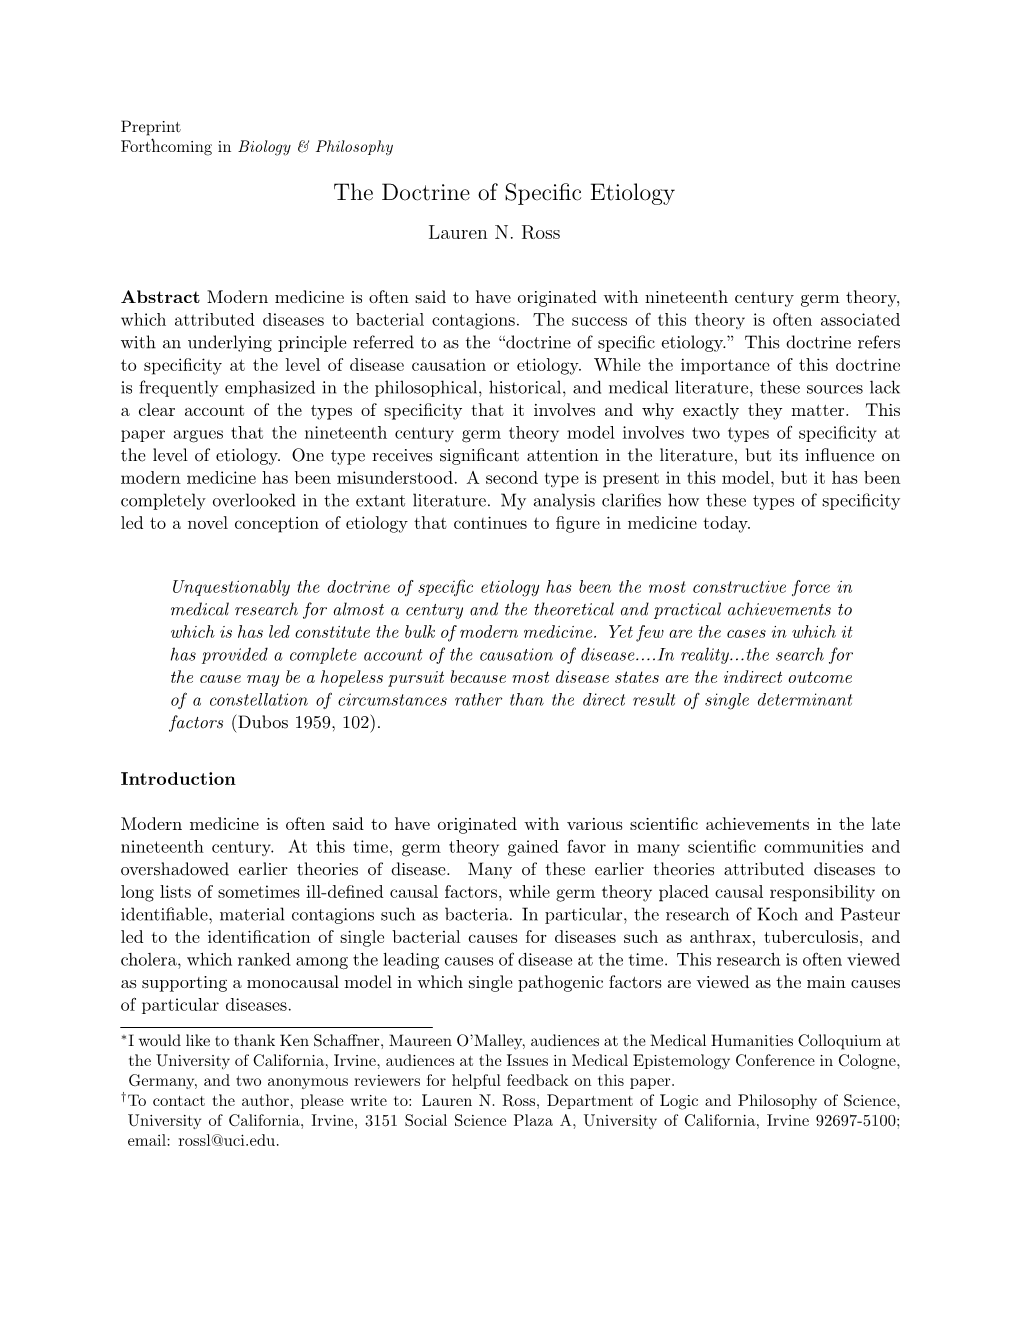 The Doctrine of Specific Etiology